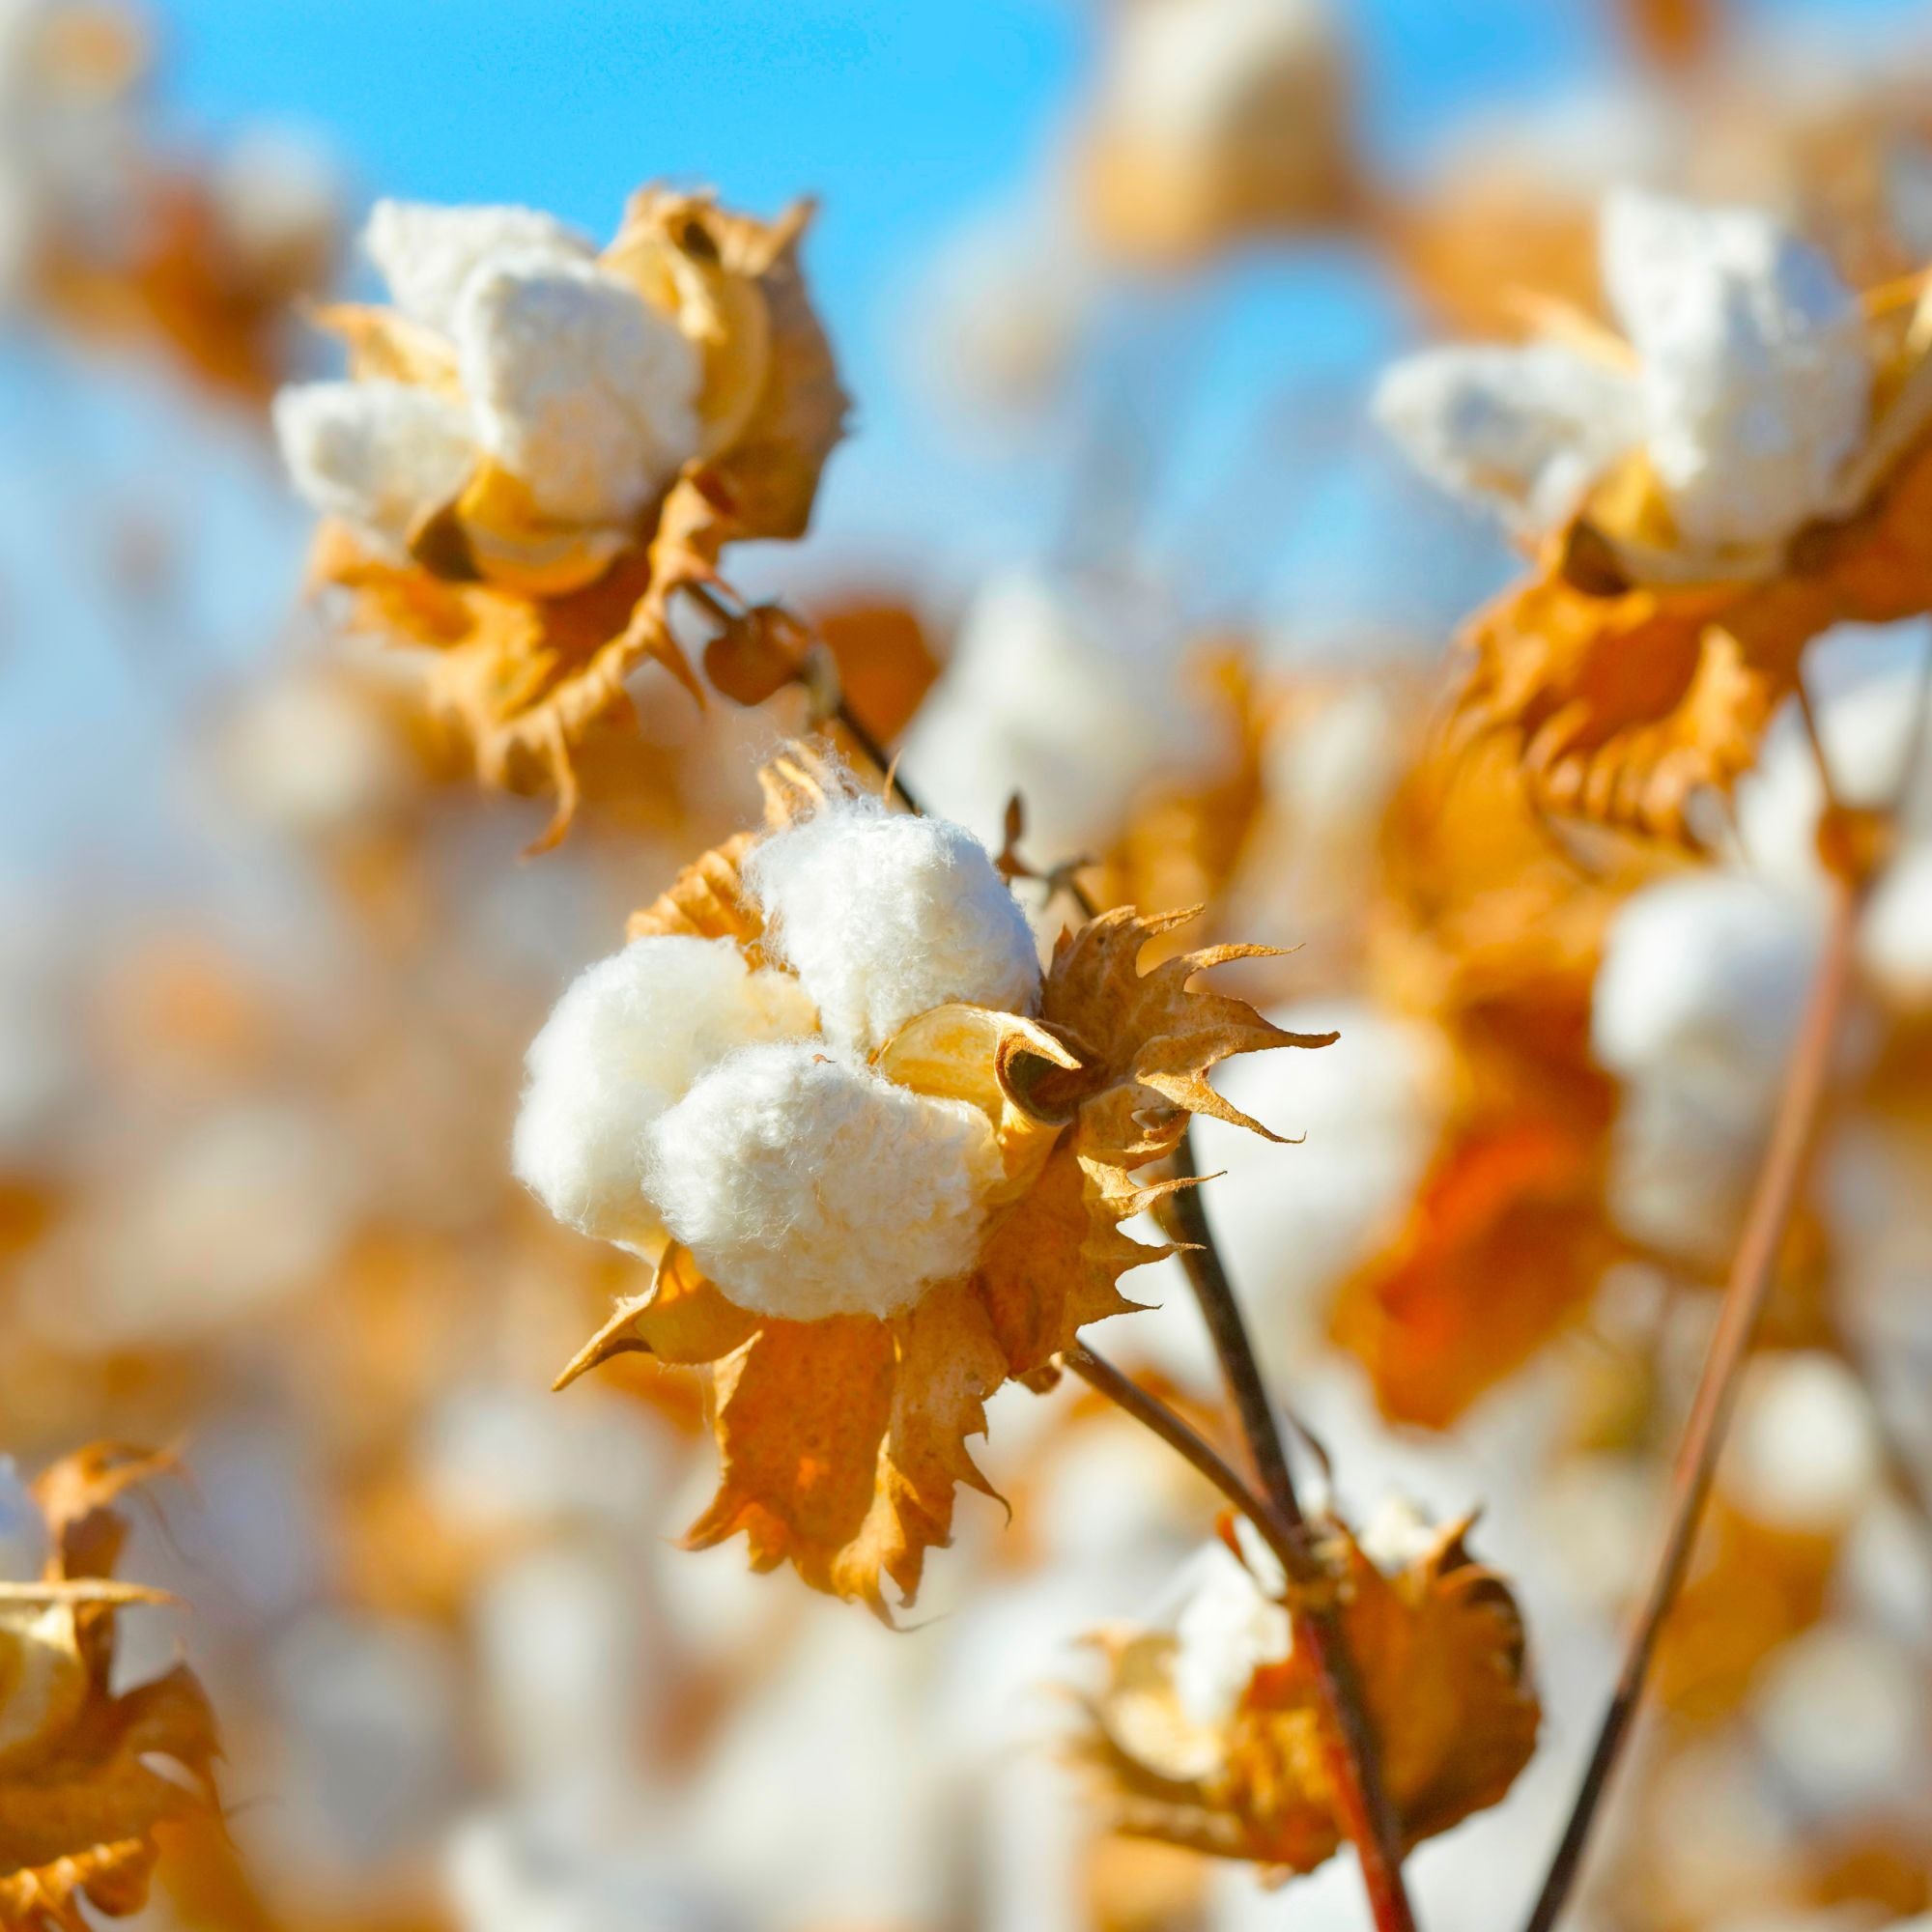 cotton buds at harvest